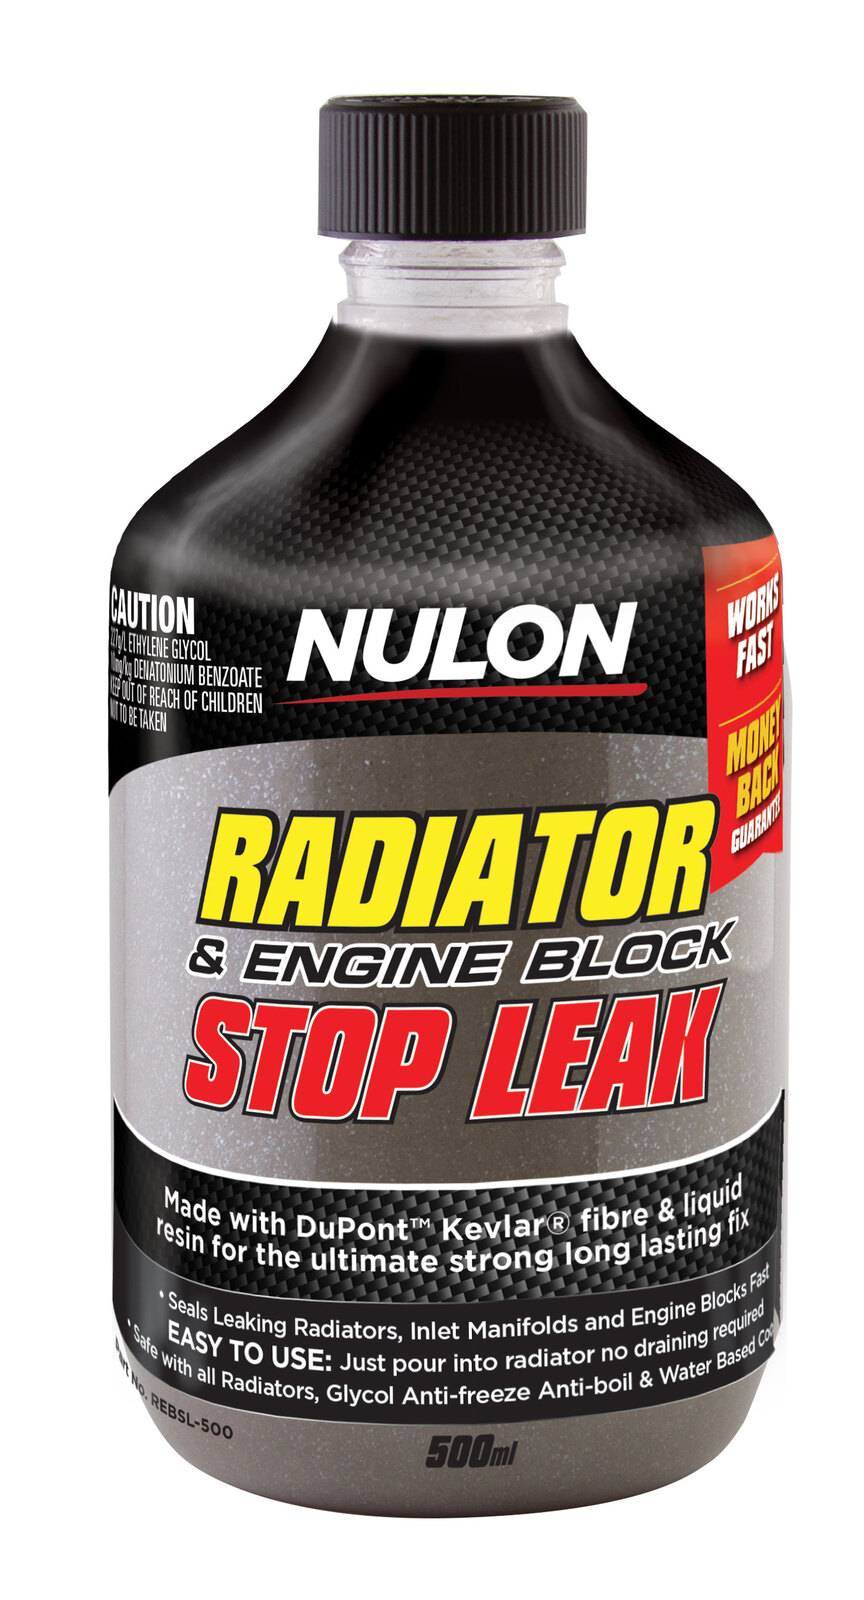 NULON Radiator Engine Block Stop Leak, Each